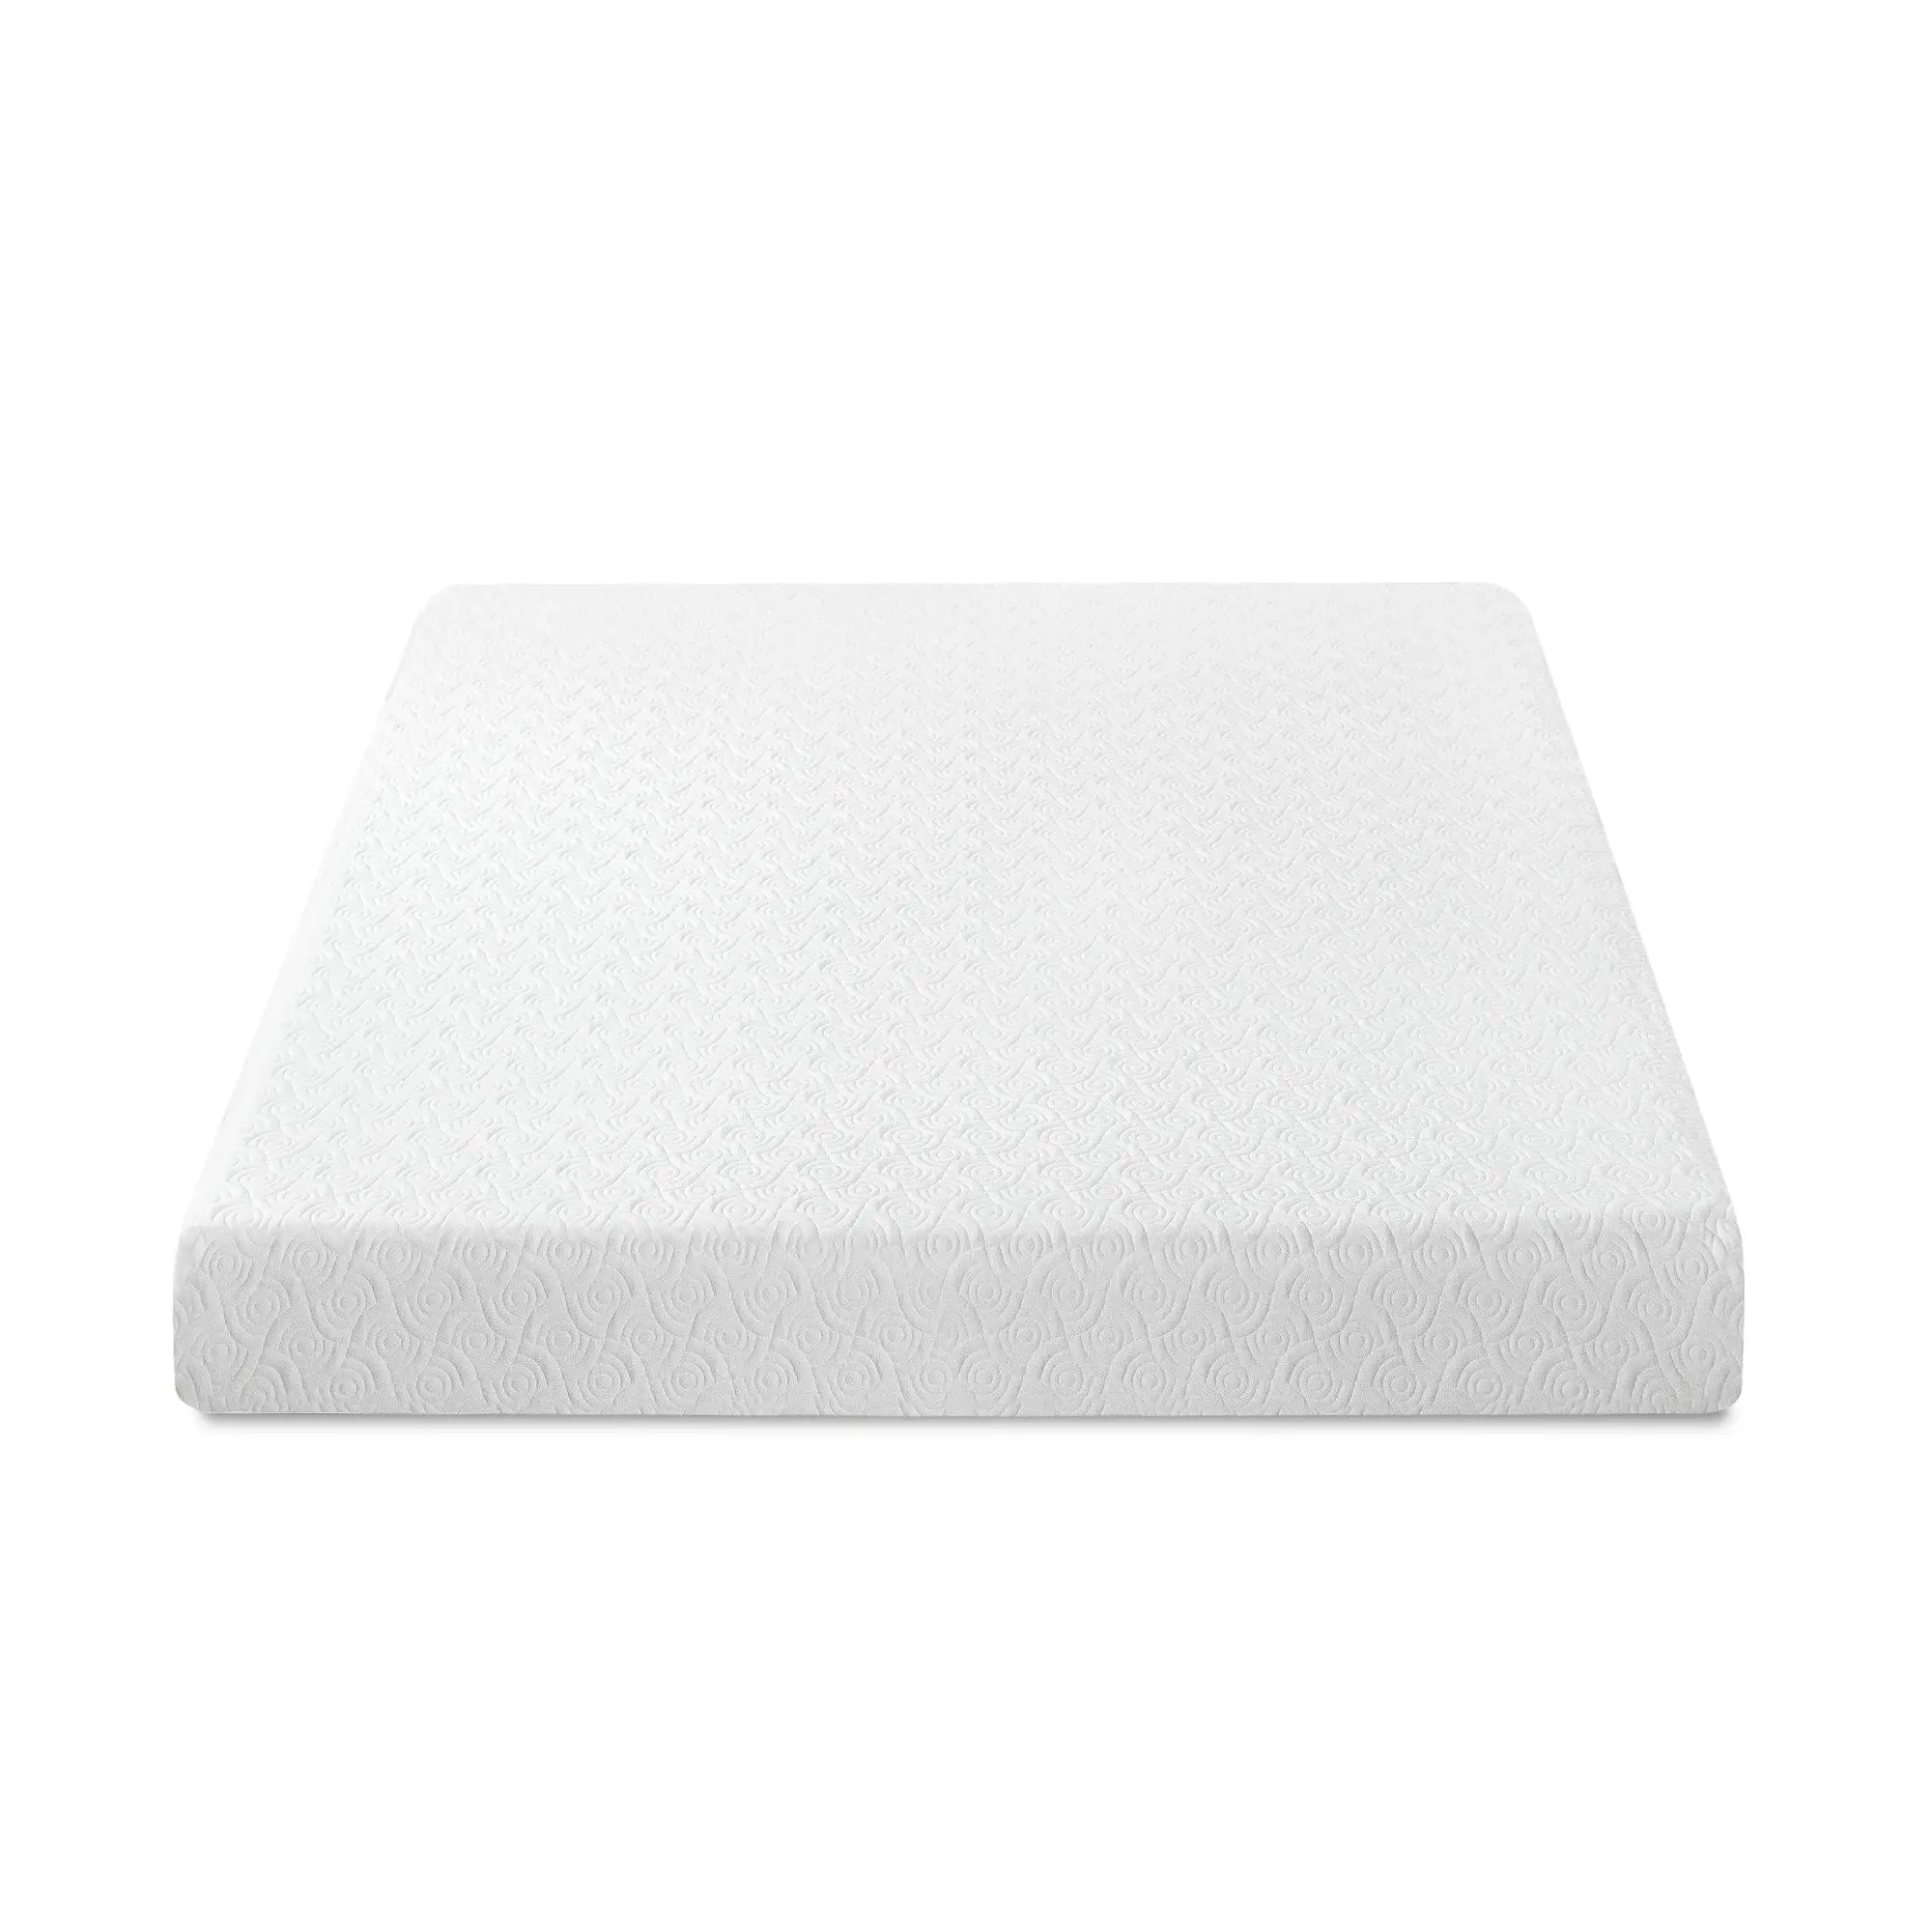 Mattress 7 inch memory foam bed mattress 18 CM hot sell gel memory foam cooling feel mattress for hotel use home use